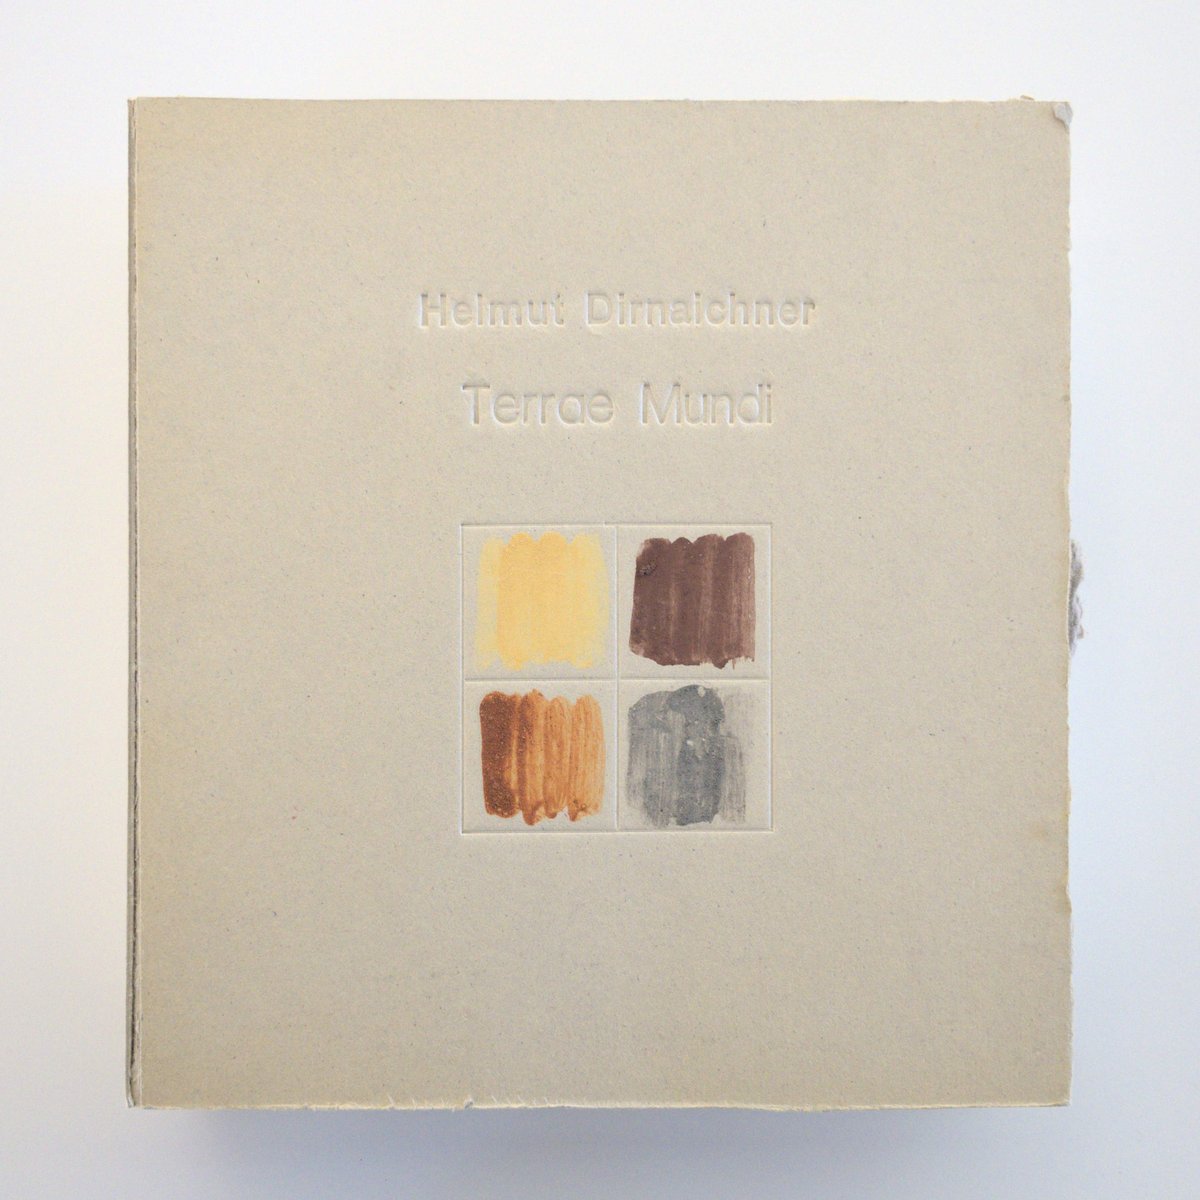 book front cover view: helmut dirnaichner, &quot;terrae mundi&quot; (2002), cardboard and soils, 23 x 23 cm